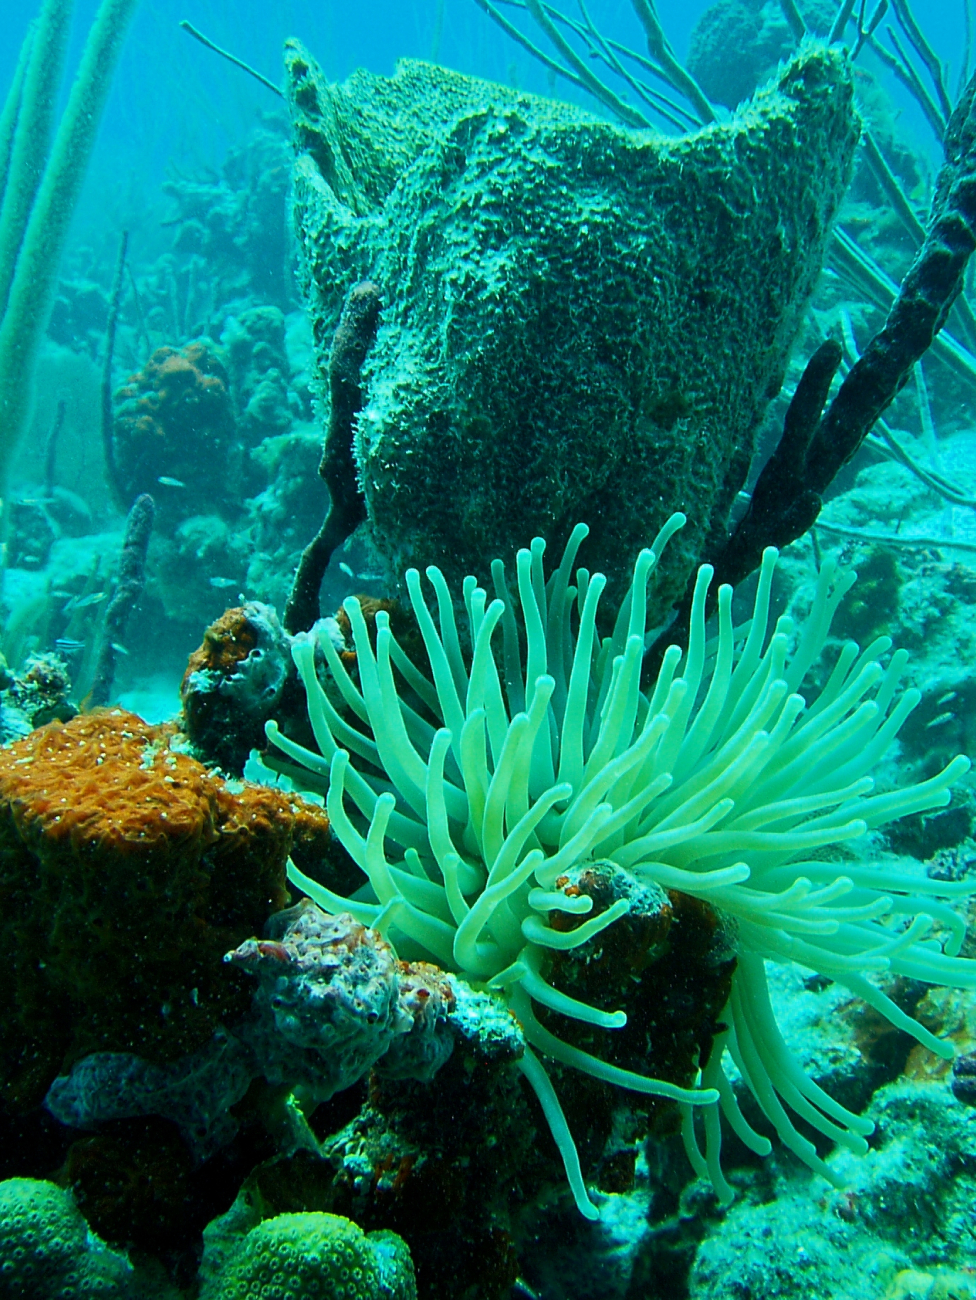 Giant Caribbean anemone, barrel sponge, and encrusting sponge